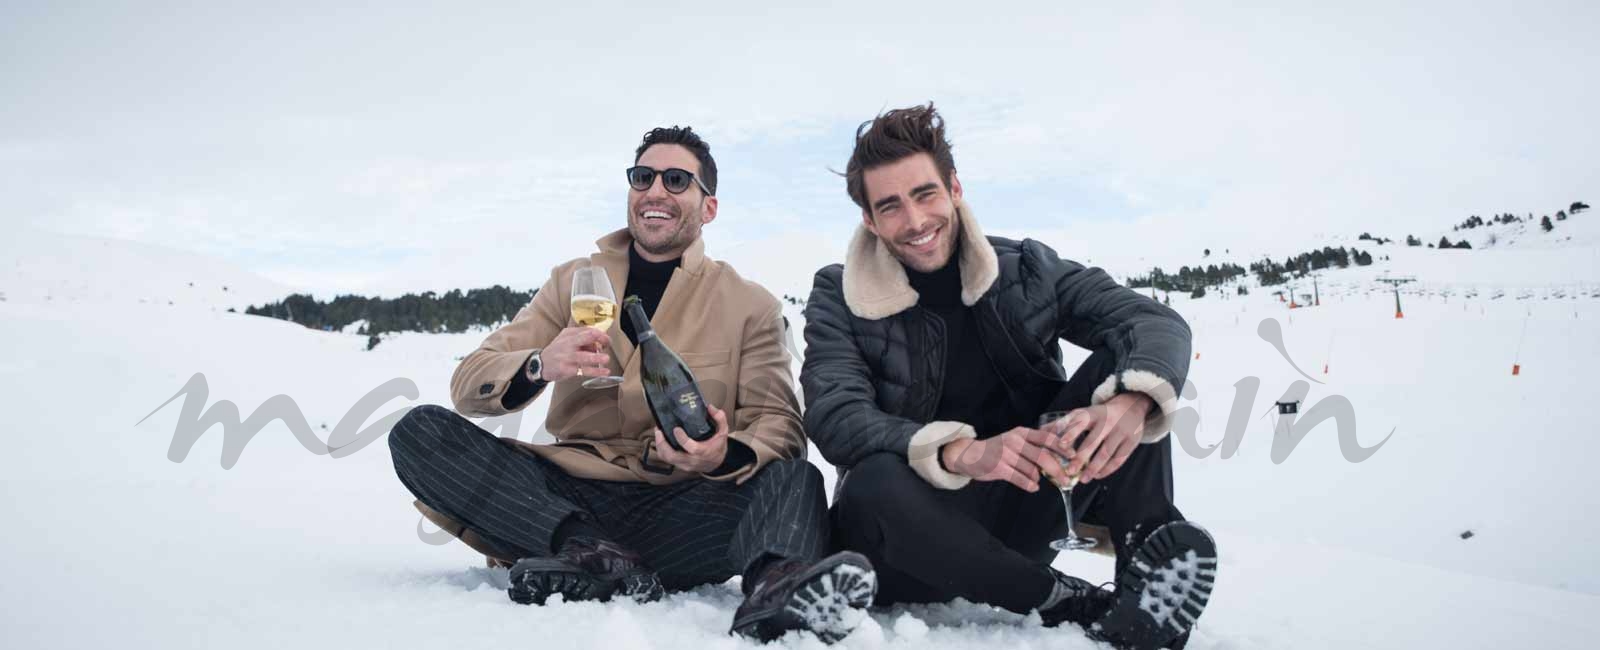 Miguel Ángel Silvestre y Jon Kortajarena se divierten en la nieve